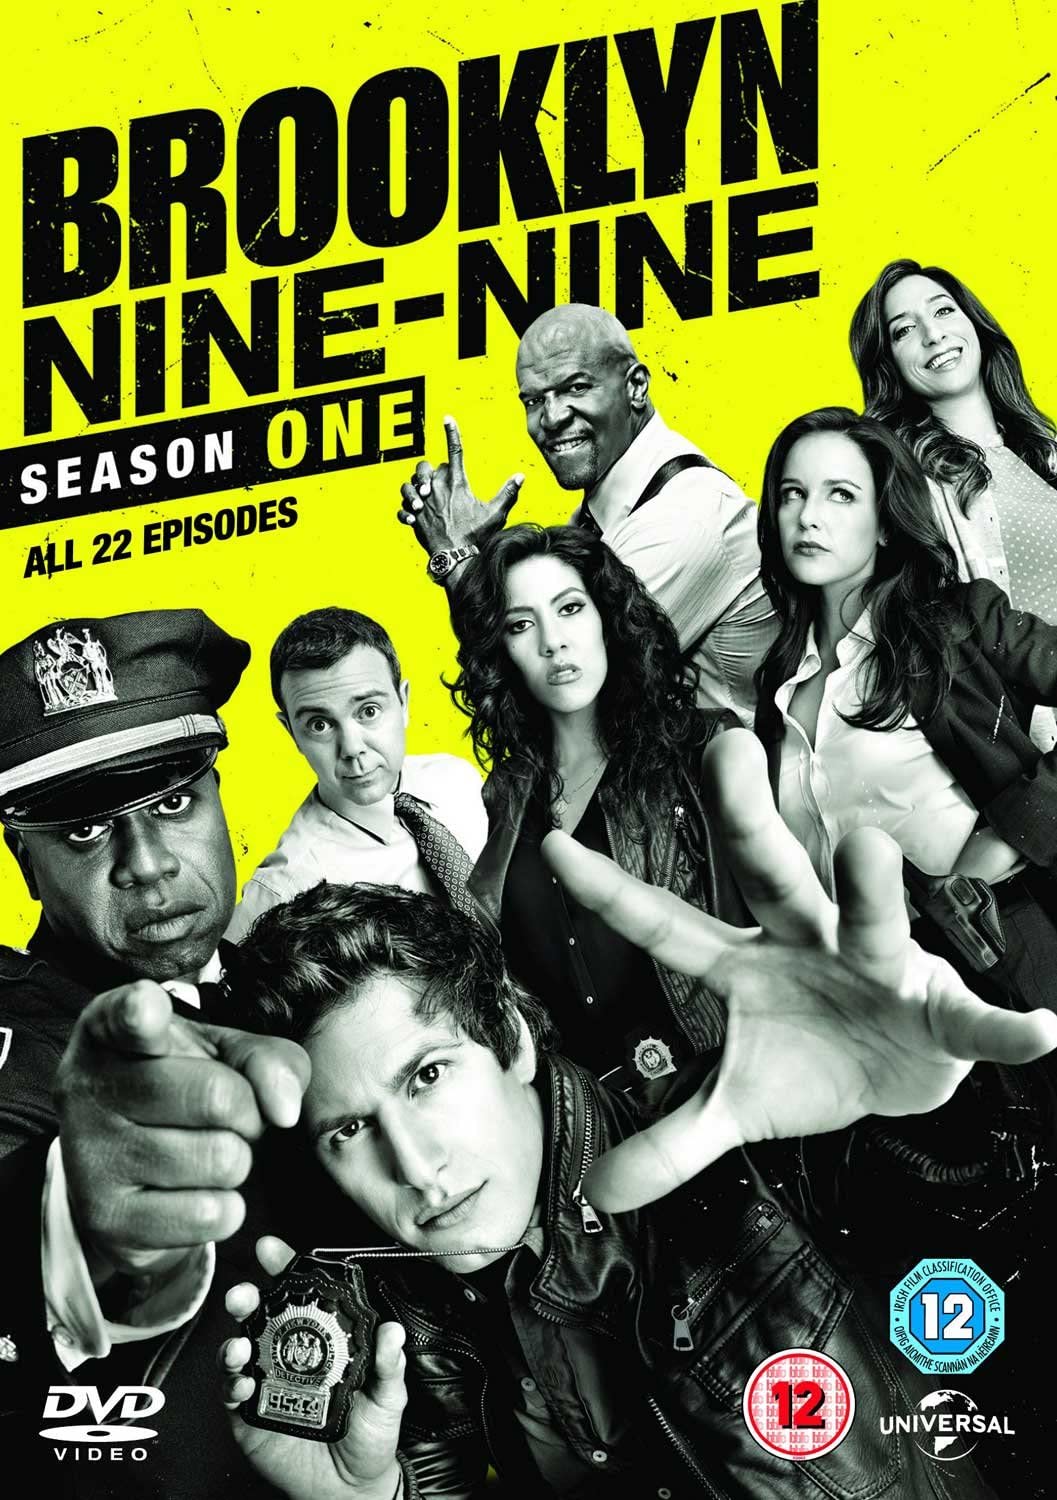 Brooklyn Nine-Nine: Season 1 (DVD)